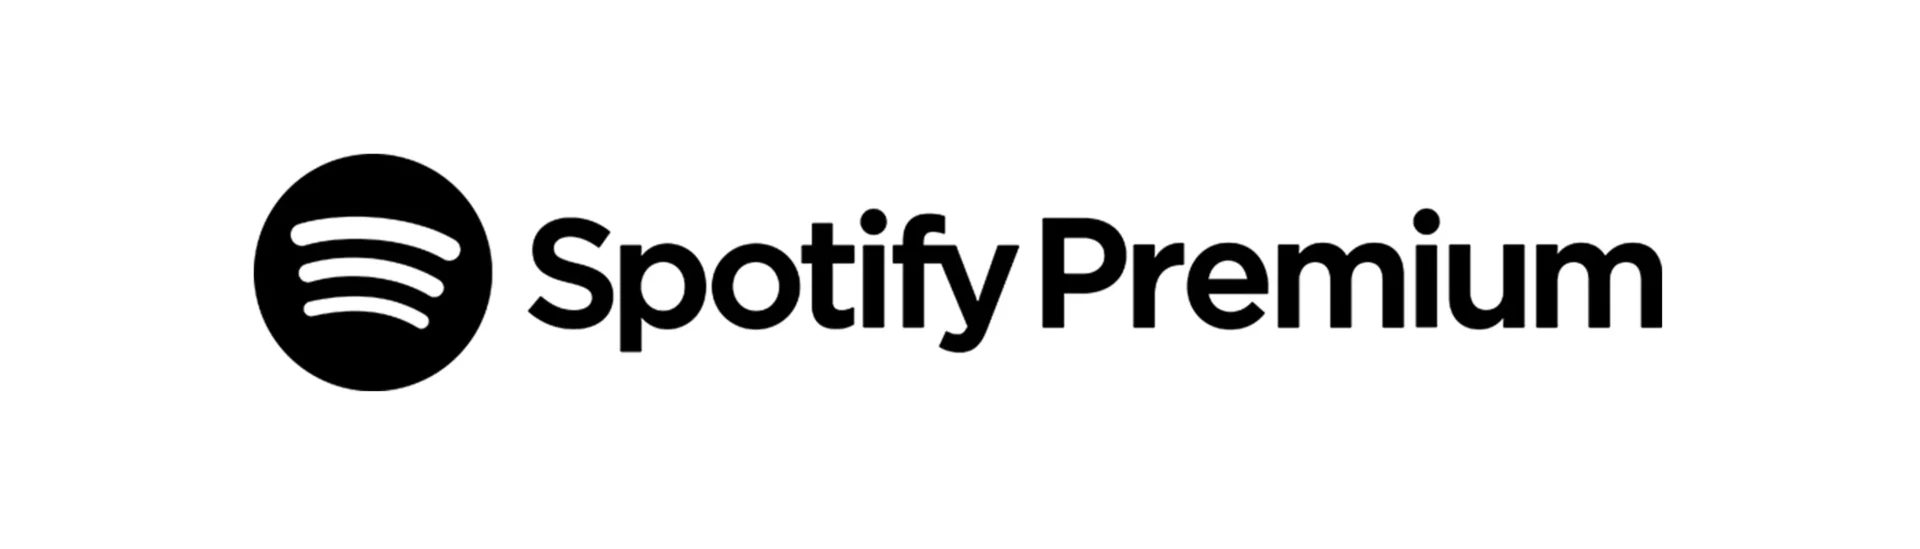 ■「Spotify Premium」とは？